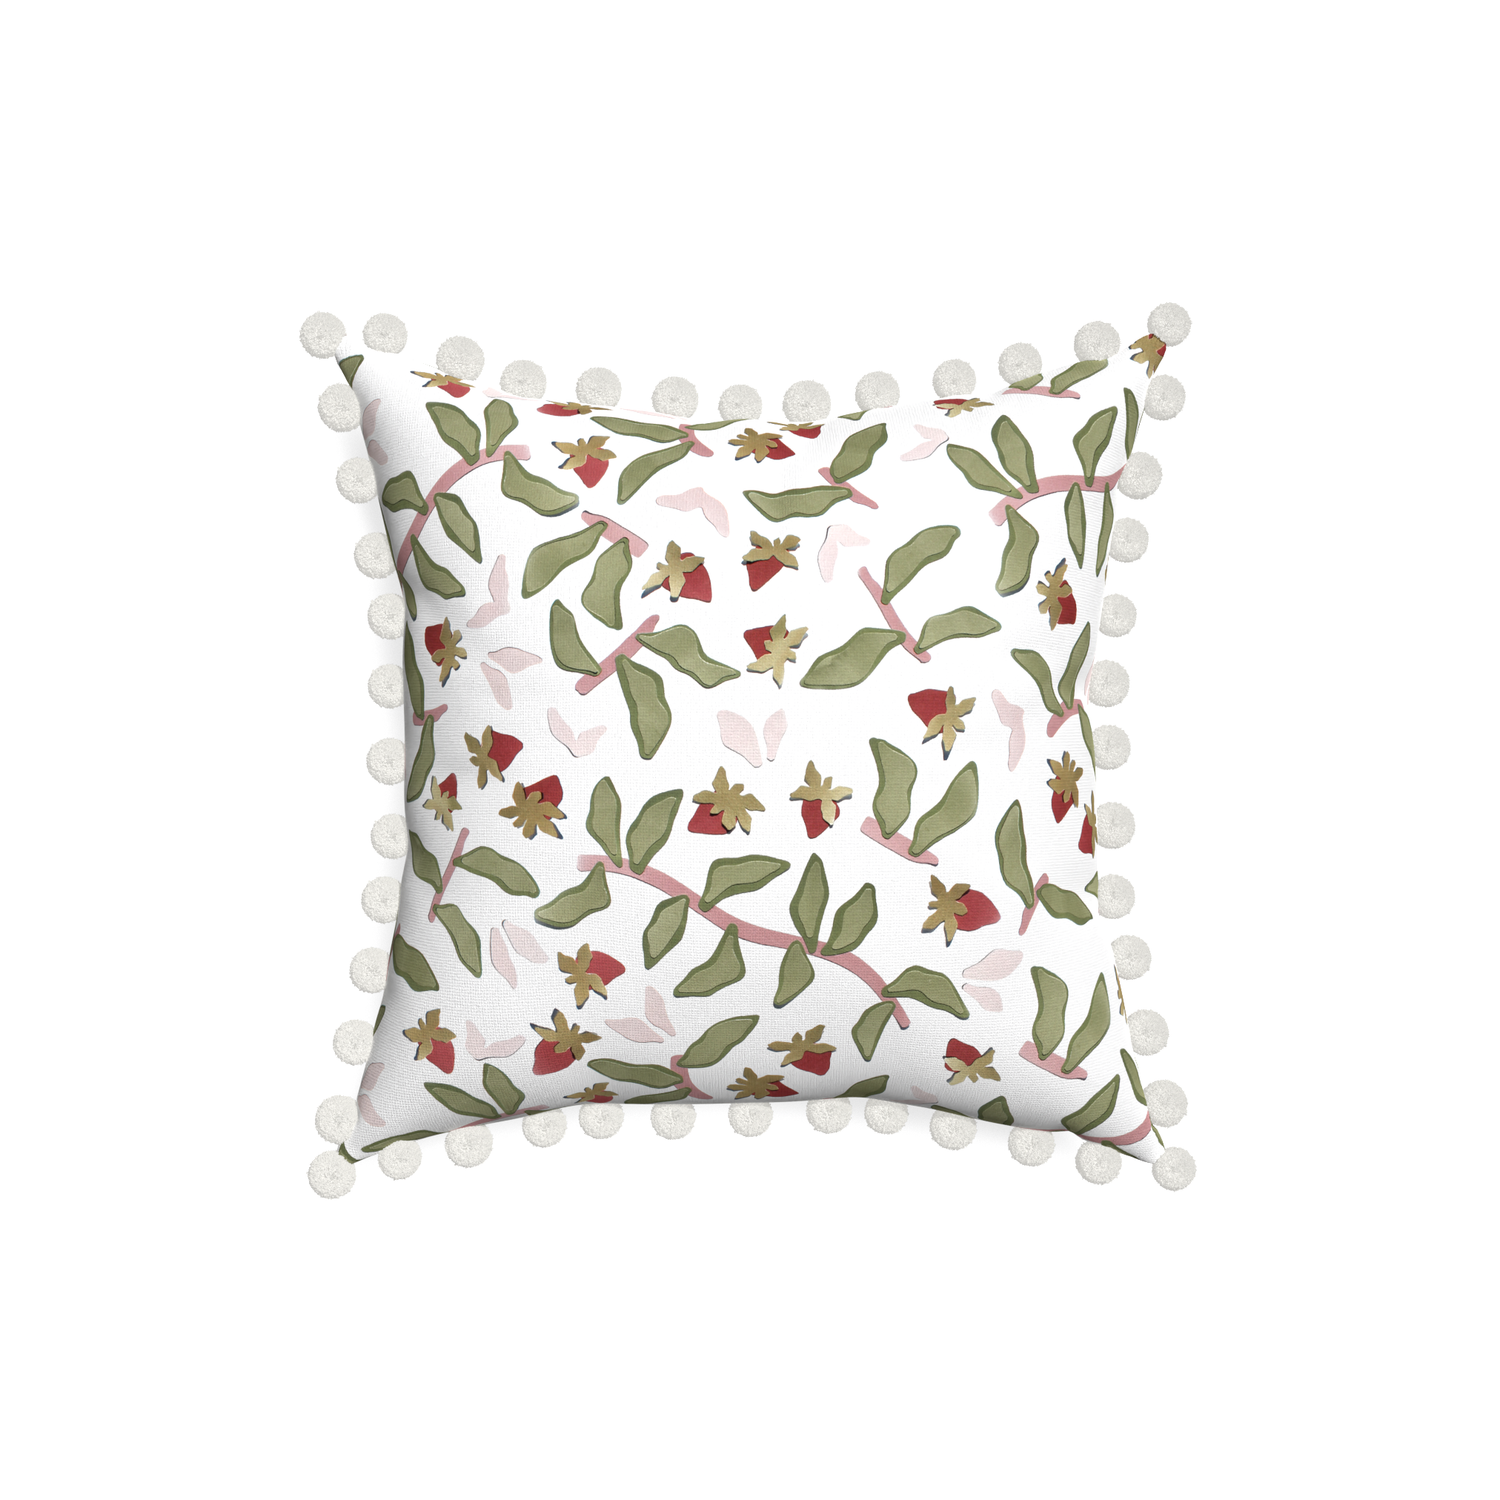 18-square nellie custom strawberry & botanicalpillow with snow pom pom on white background